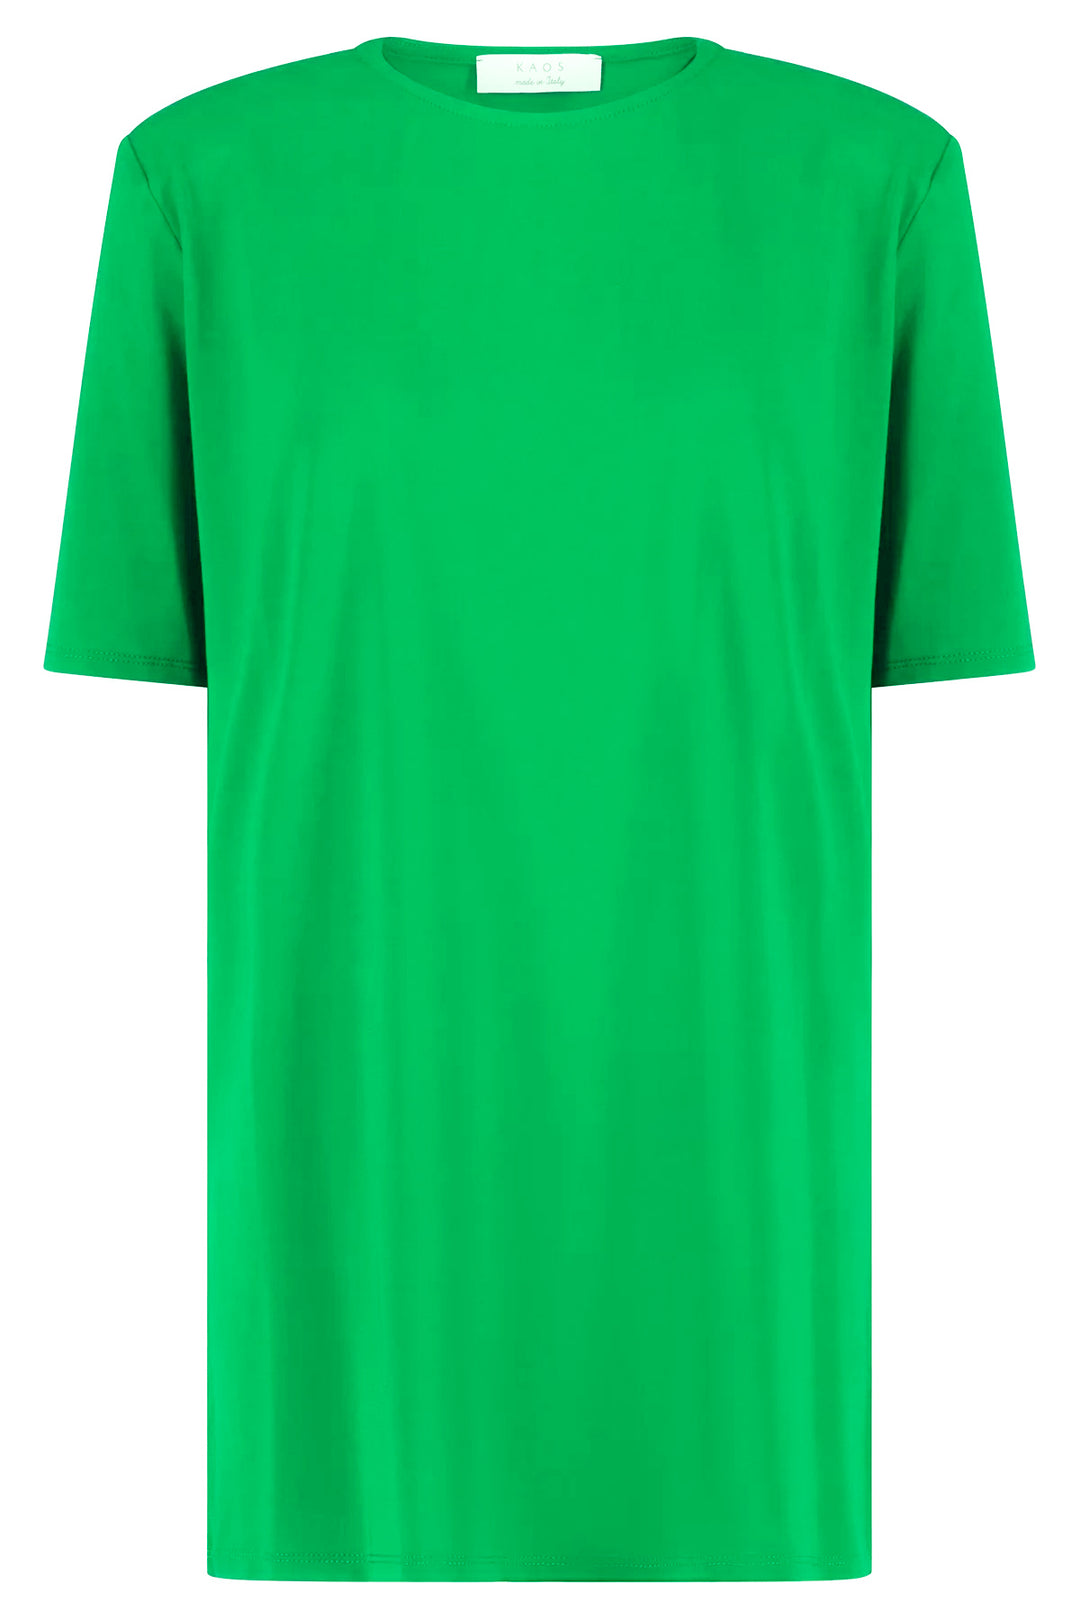 KAOS Maxi t-shirt con spacco in jersey crepe verde - Mancinelli 1954